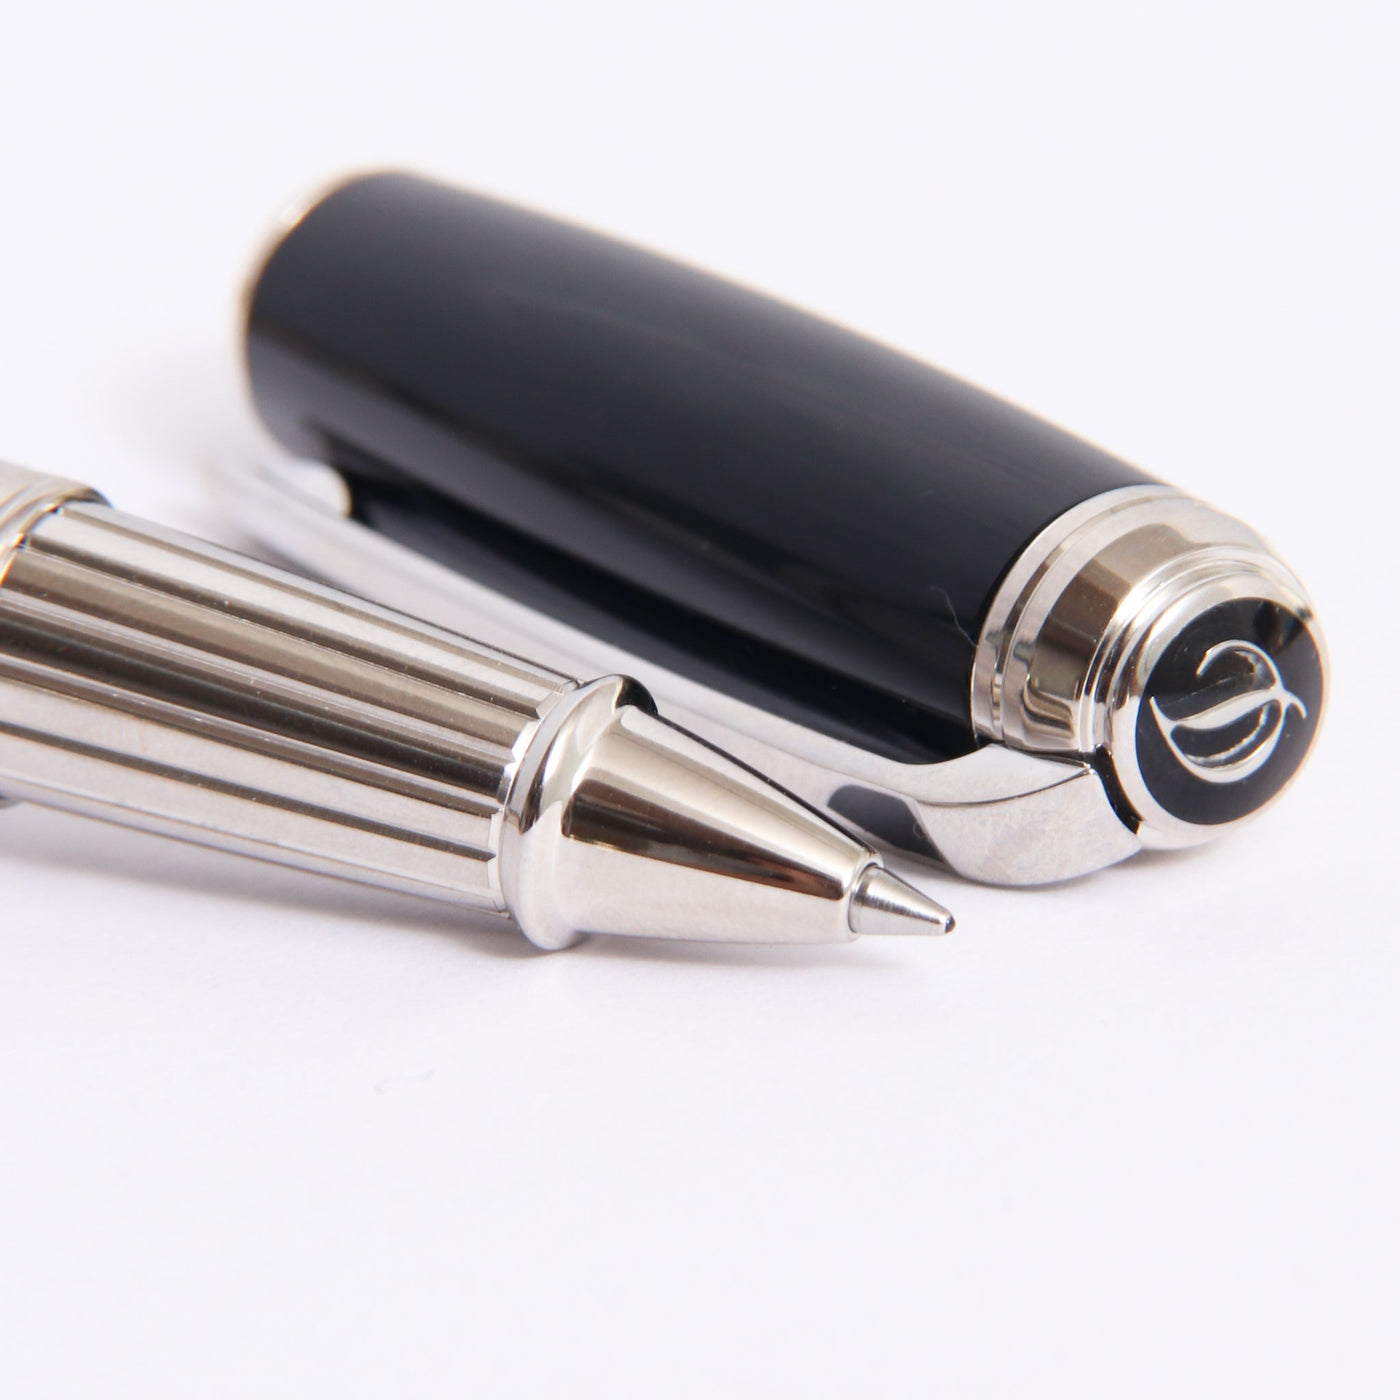 ST Dupont Line D Large Black & Palladium Rollerball Pen Tip Details